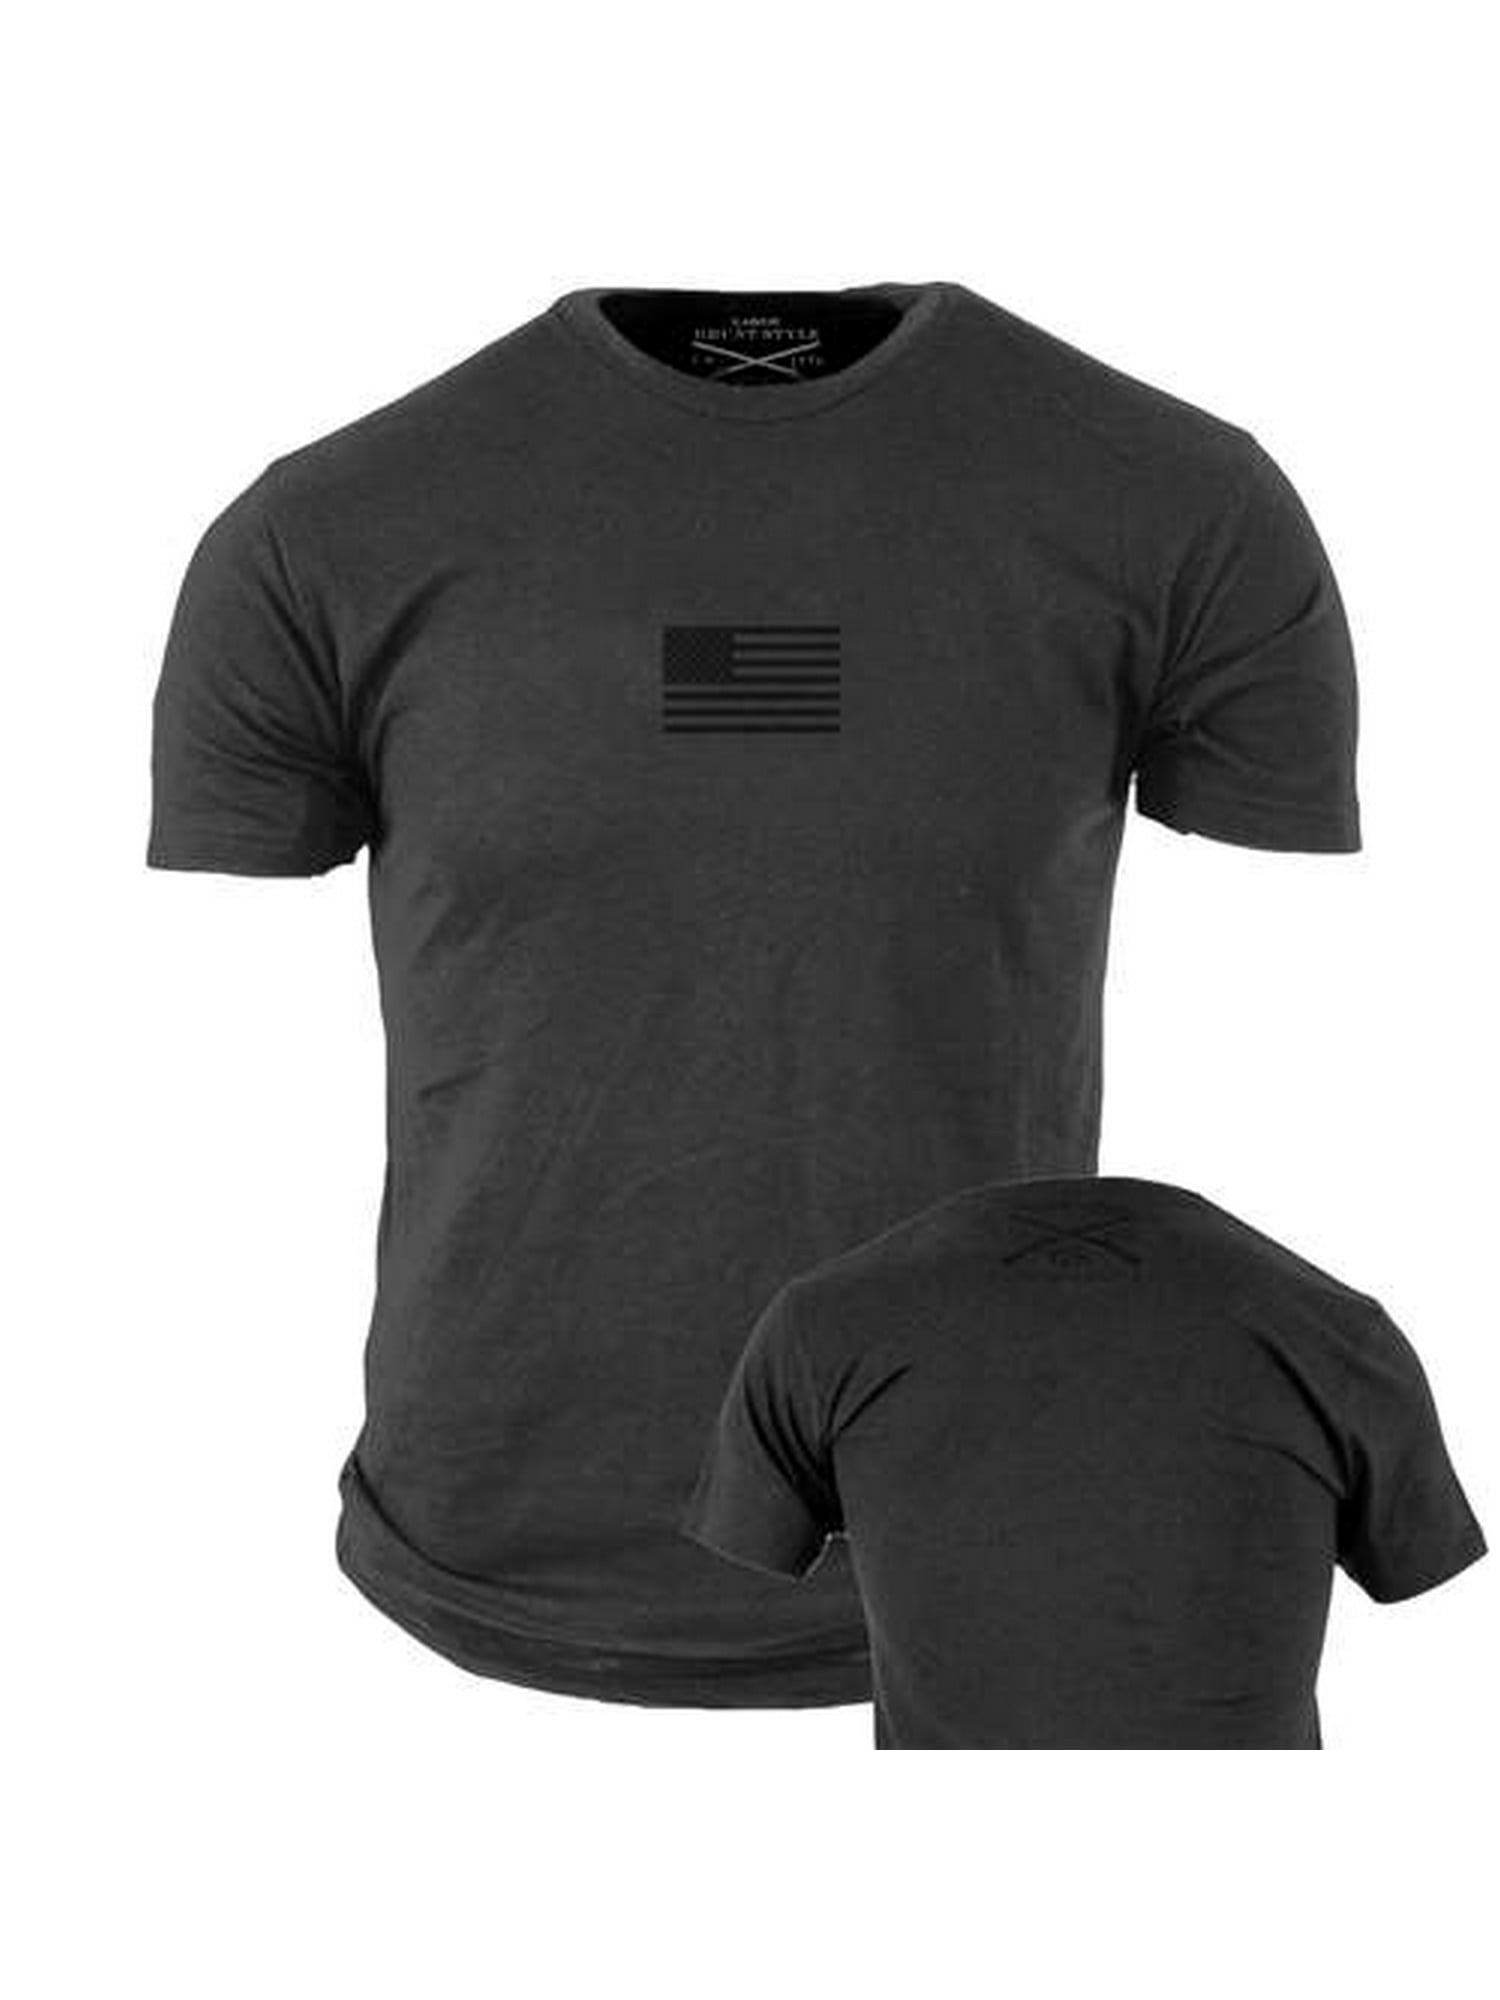 Grunt Style - Grunt Style American Flag Men's PT Shirt - Walmart.com ...